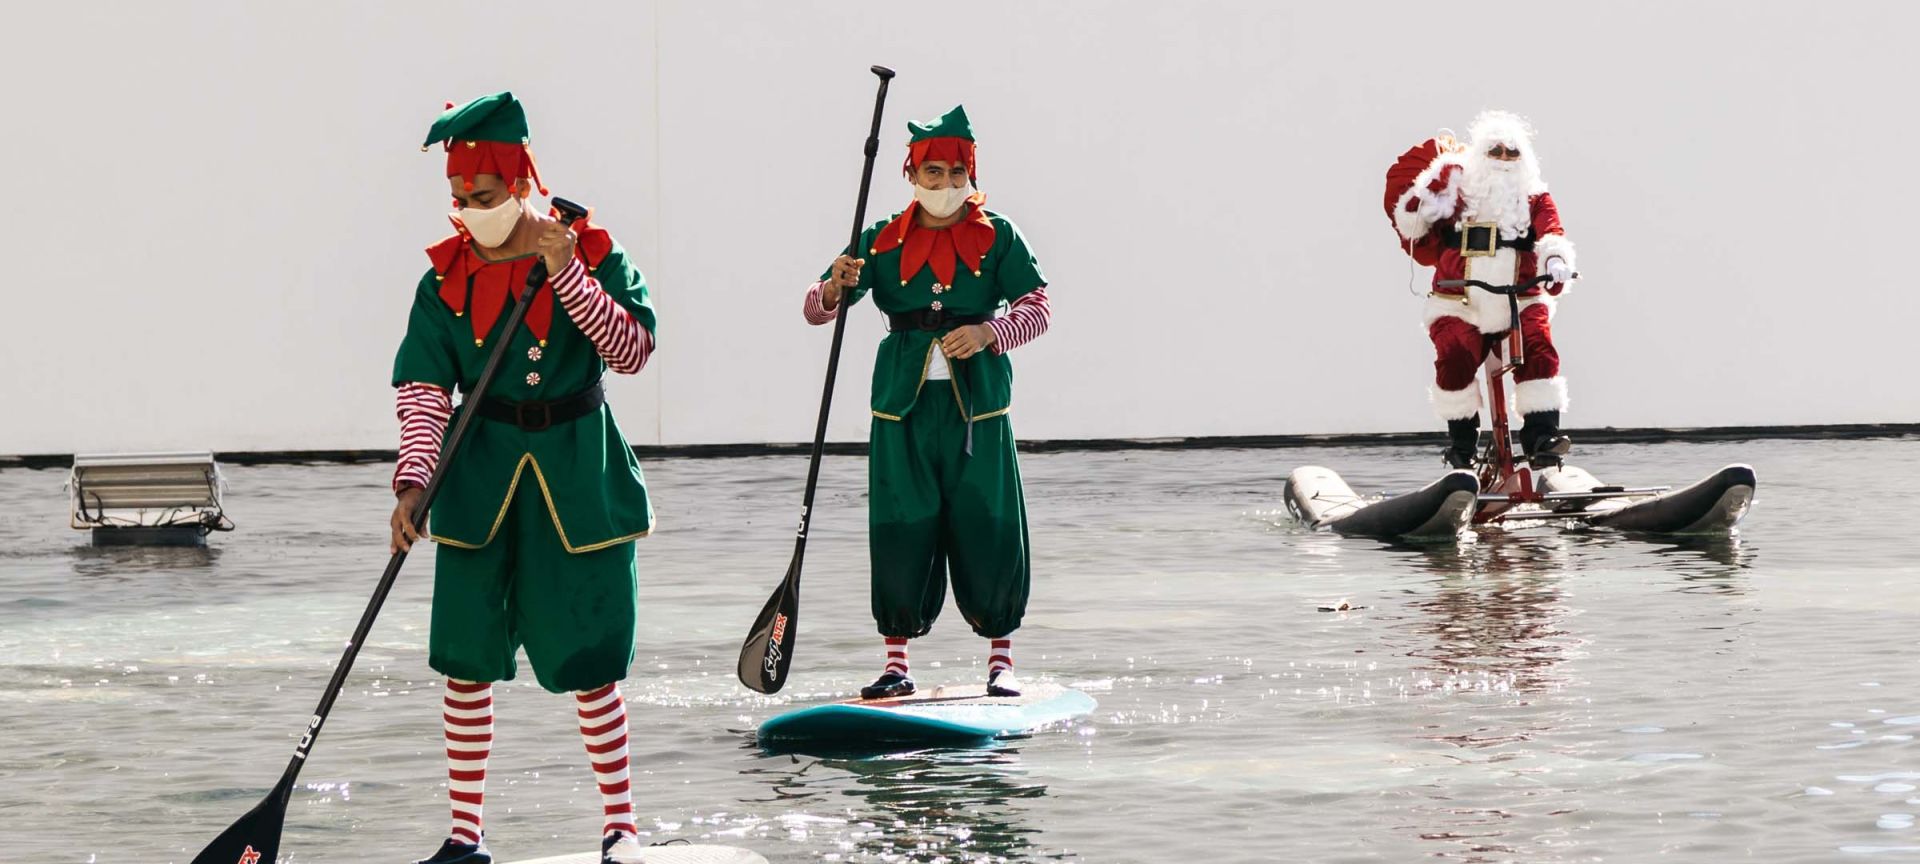 Santa and Elves on a Paddleboard